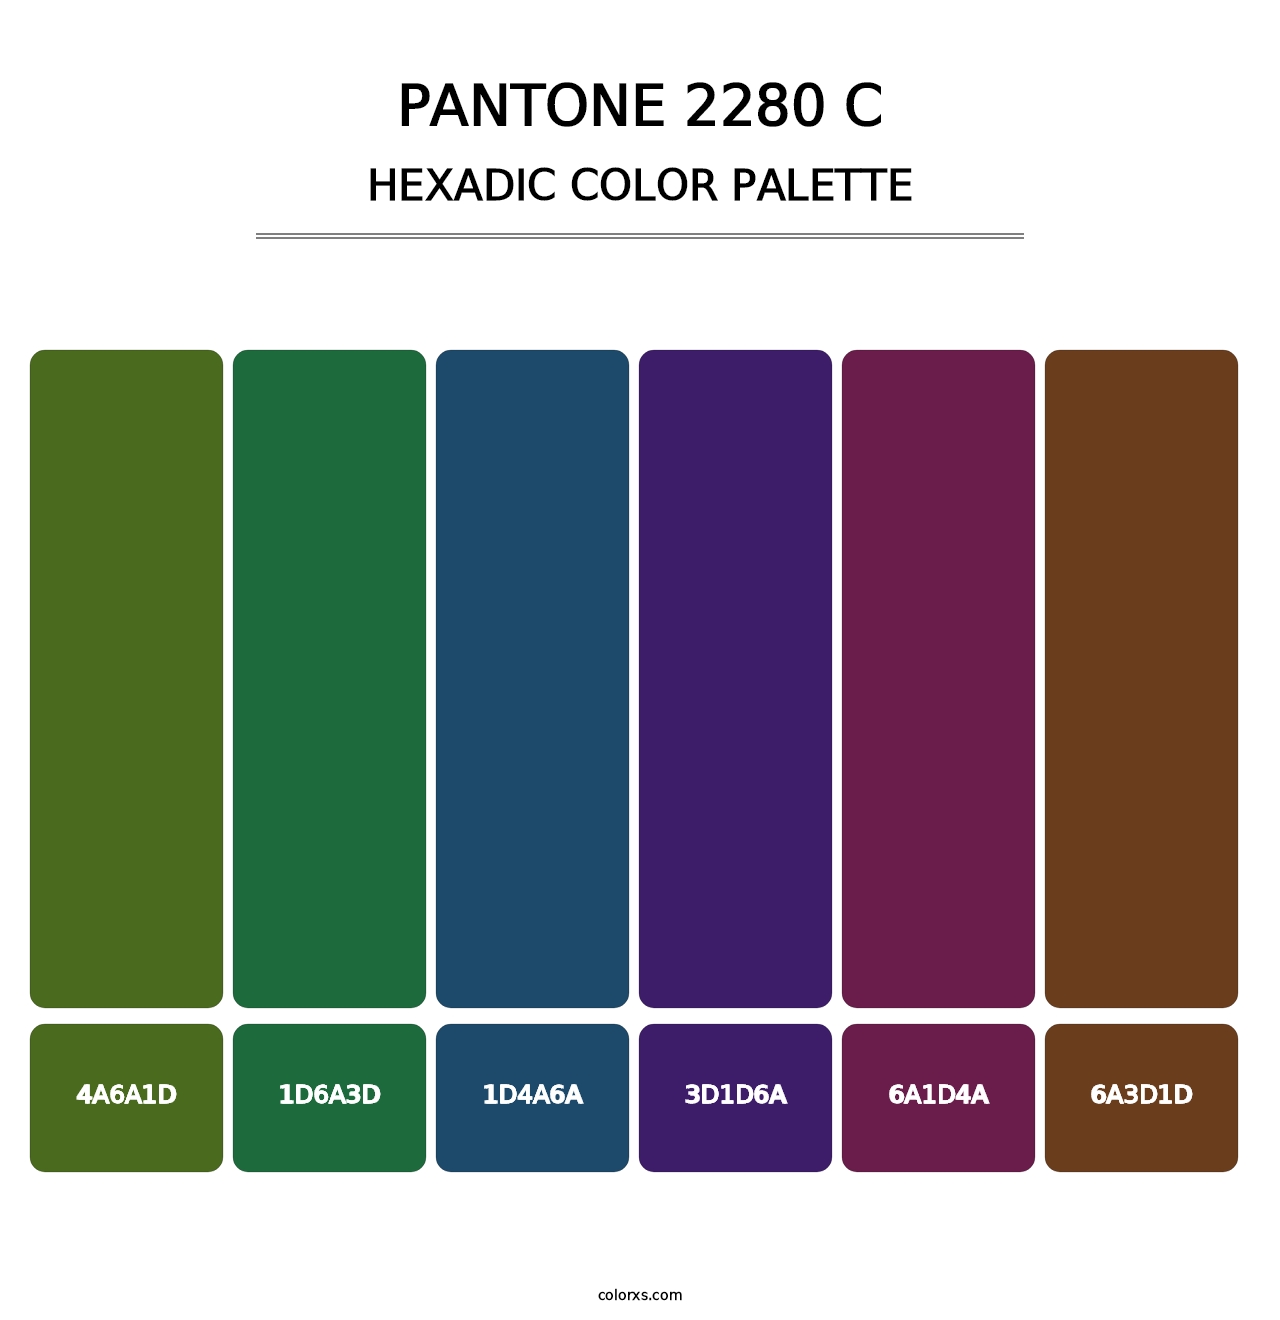 PANTONE 2280 C - Hexadic Color Palette